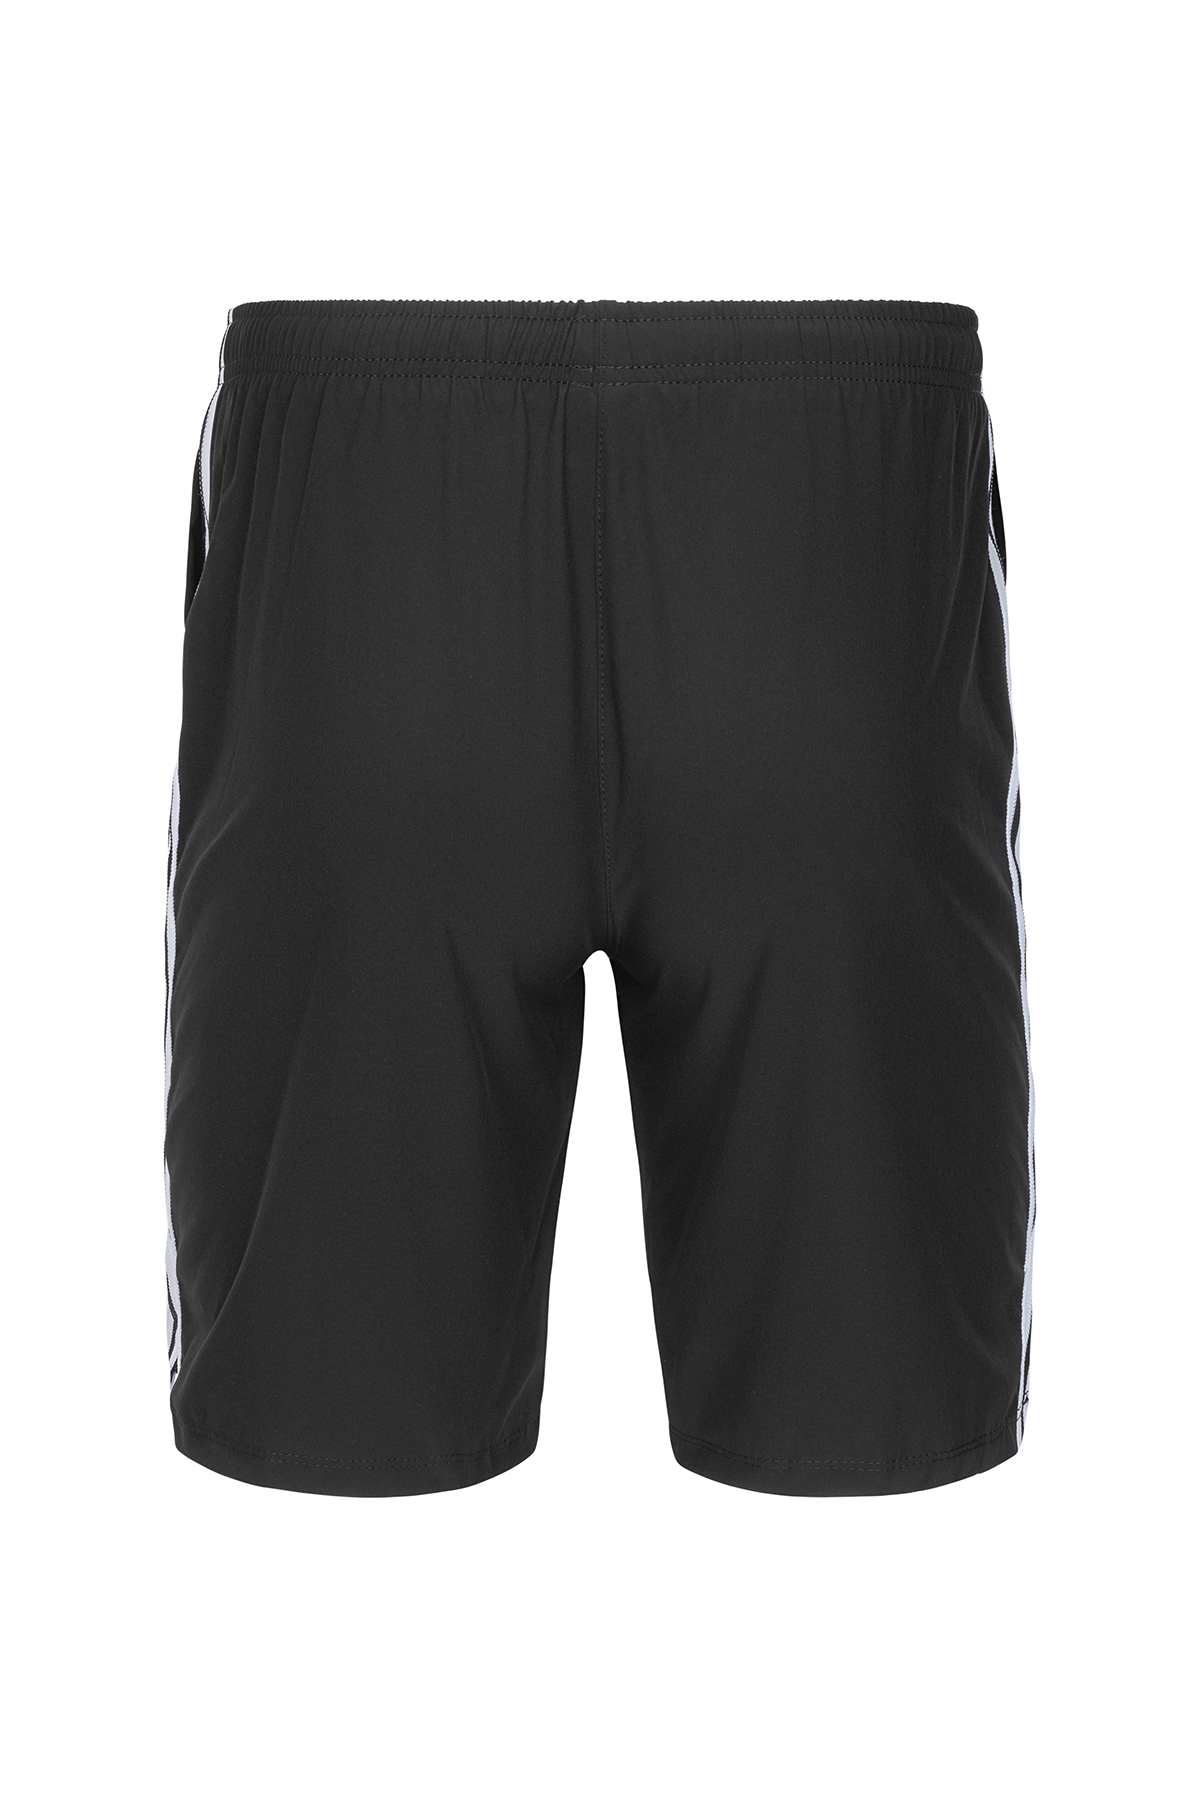 Men's Baseline Striped Shorts